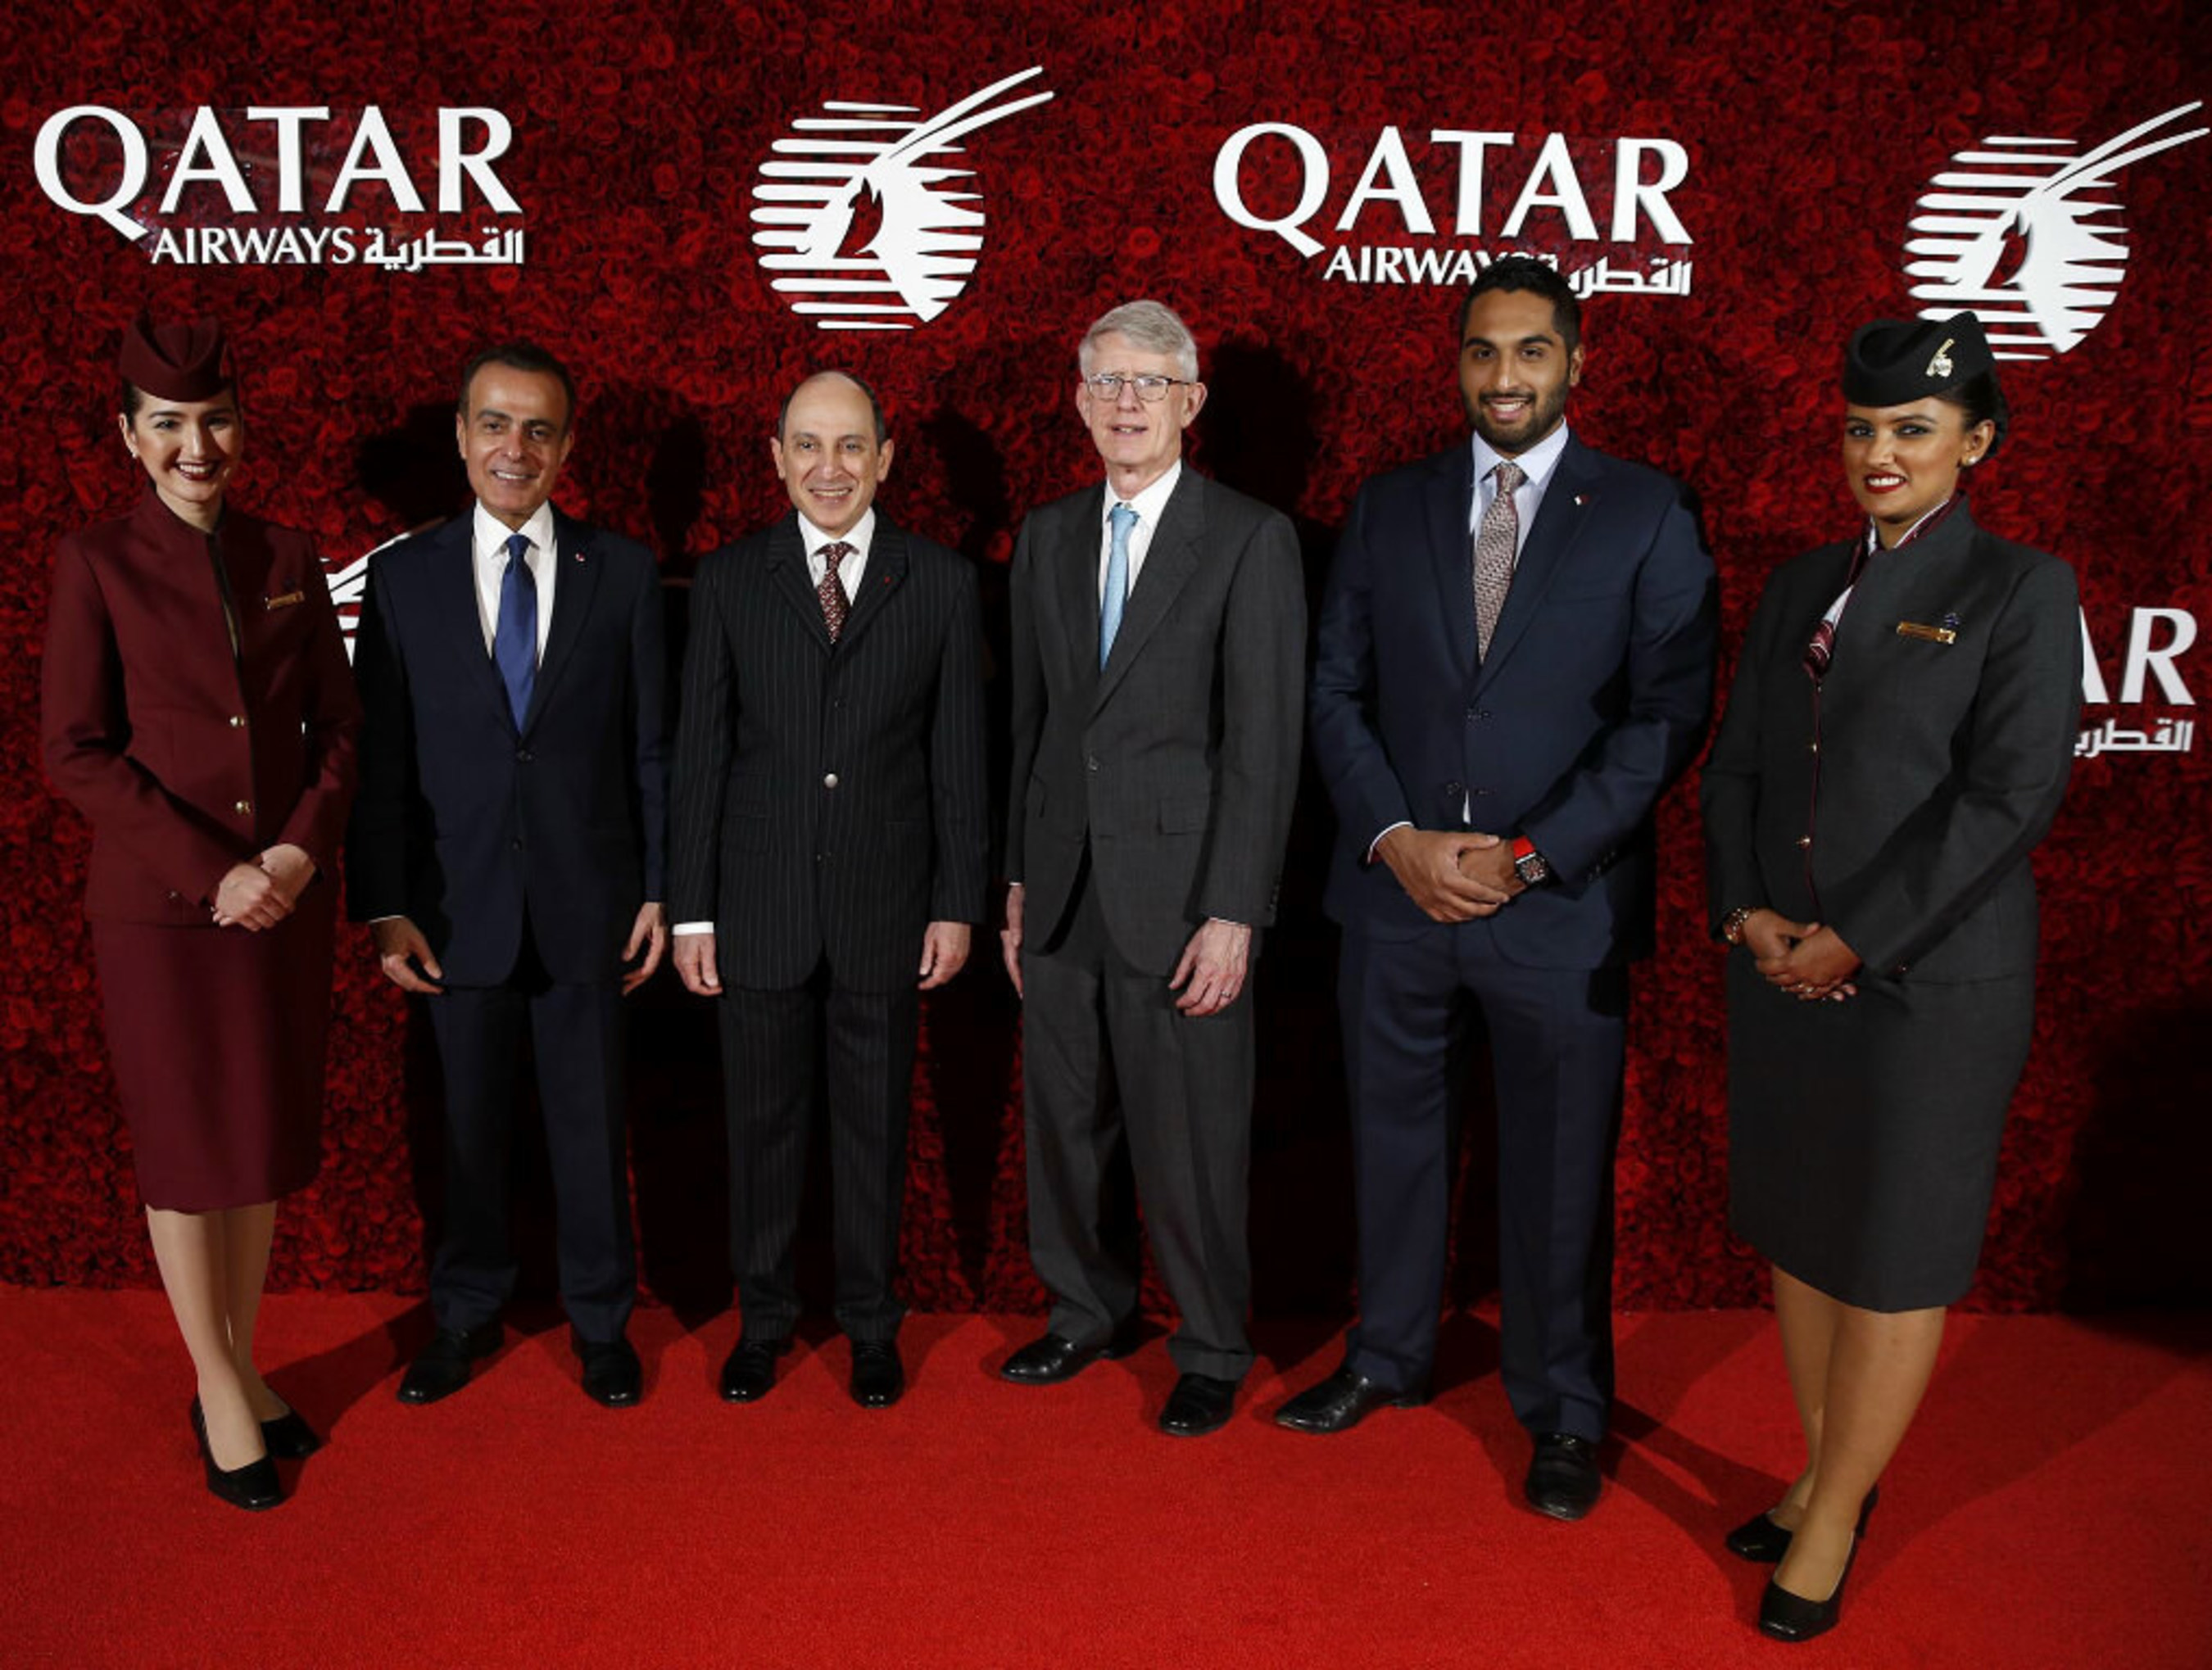 Qatar Airways Group Chief Executive, His Excellency Mr. Akbar Al Baker hosts the Boston launch gala